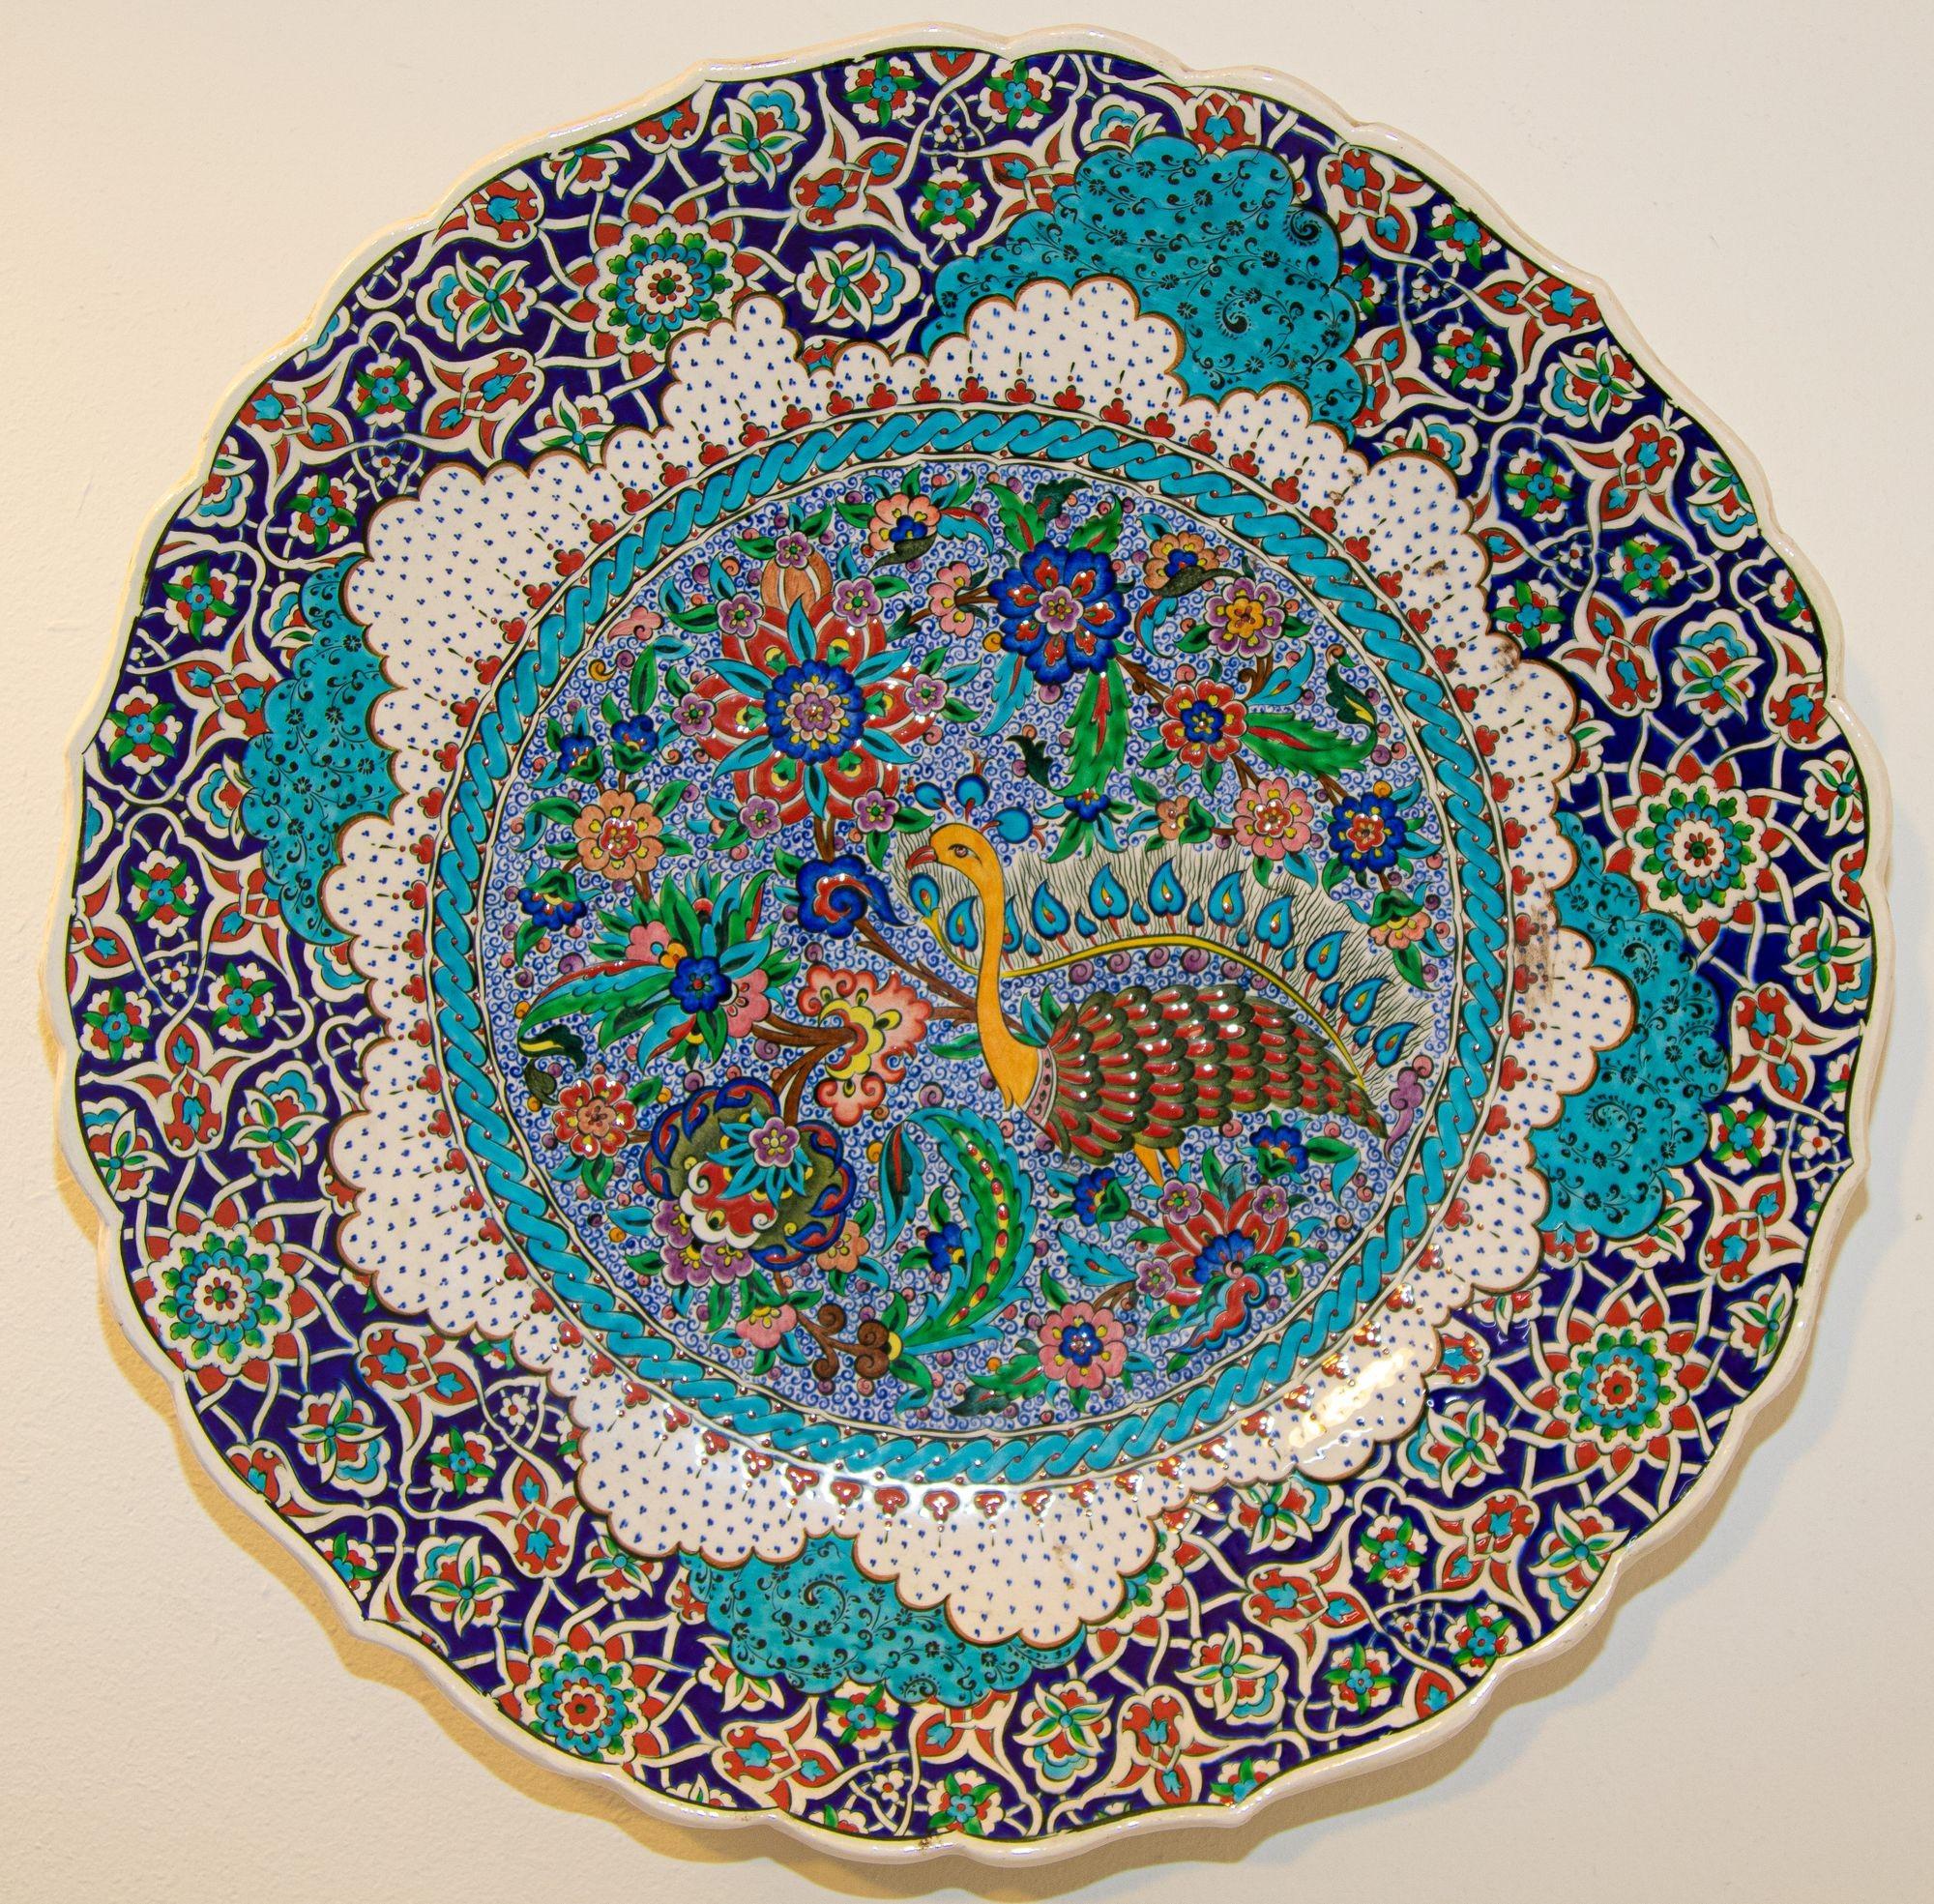 Turkish Hand Painted Decorative Plate After an Original Iznik 16th C. Ottoman Design